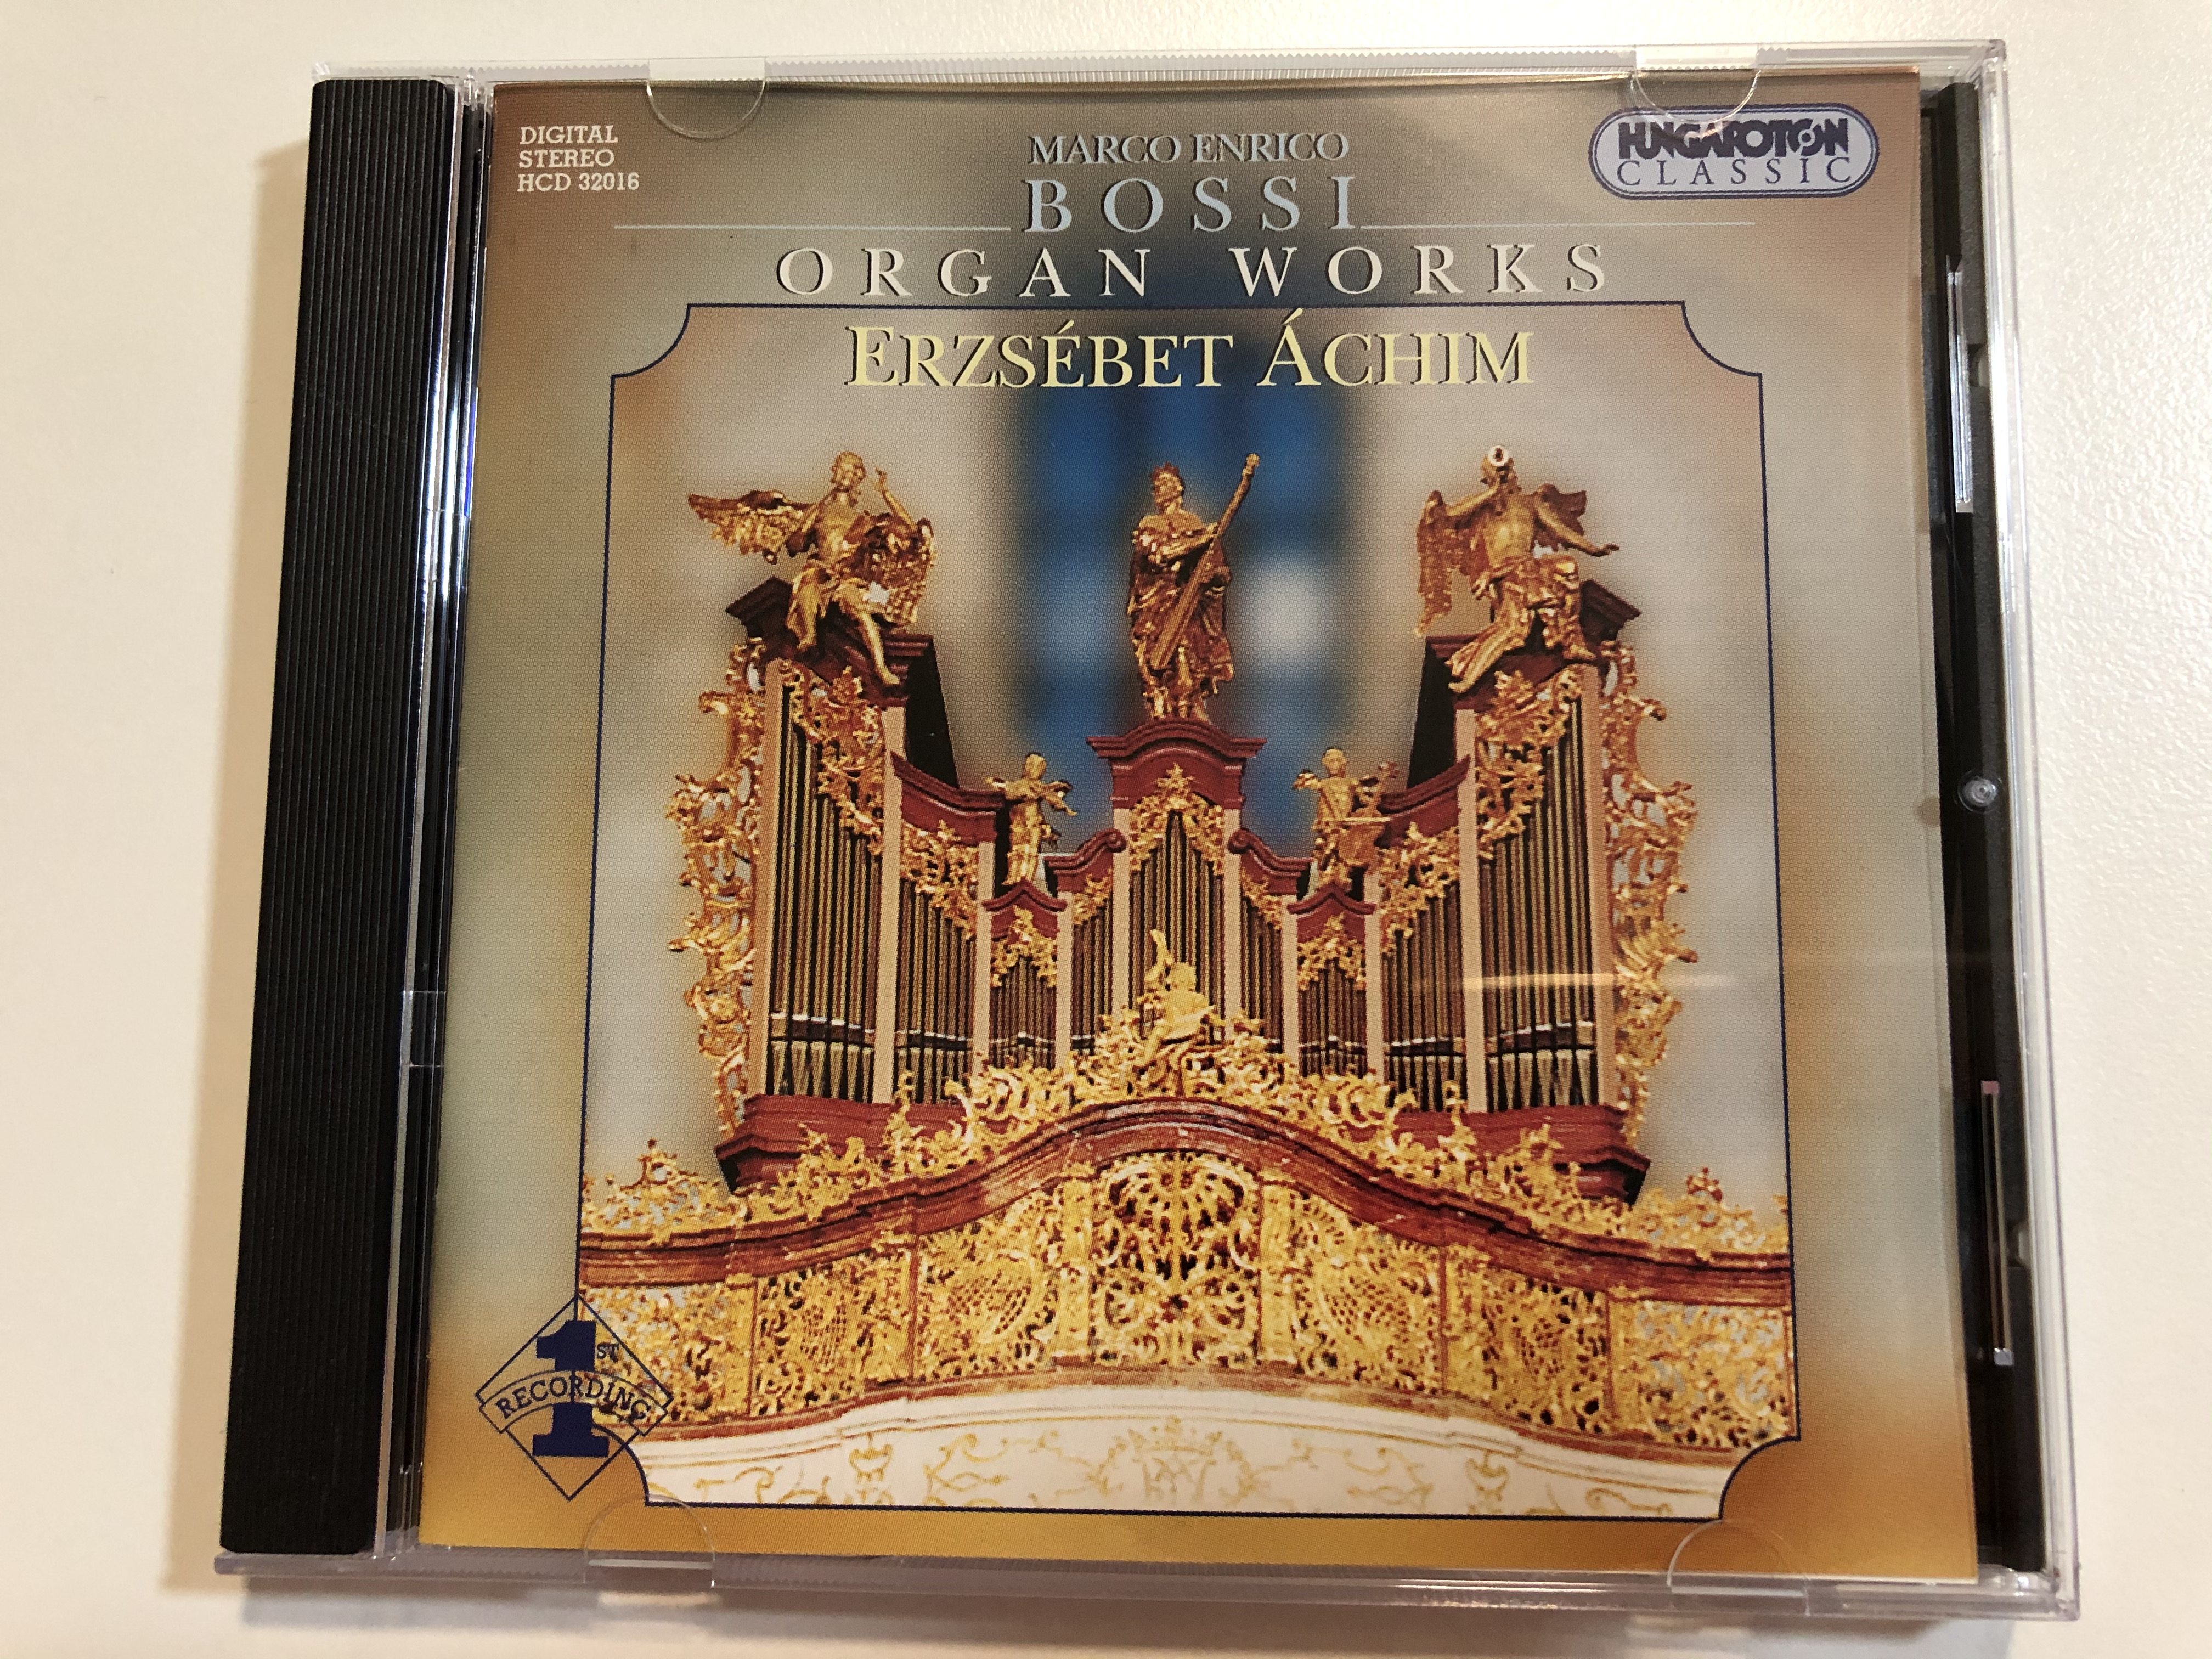 marco-enrico-bossi-organ-works-erzsebet-achim-hungaroton-classic-audio-cd-2001-stereo-hcd-32016-1-.jpg